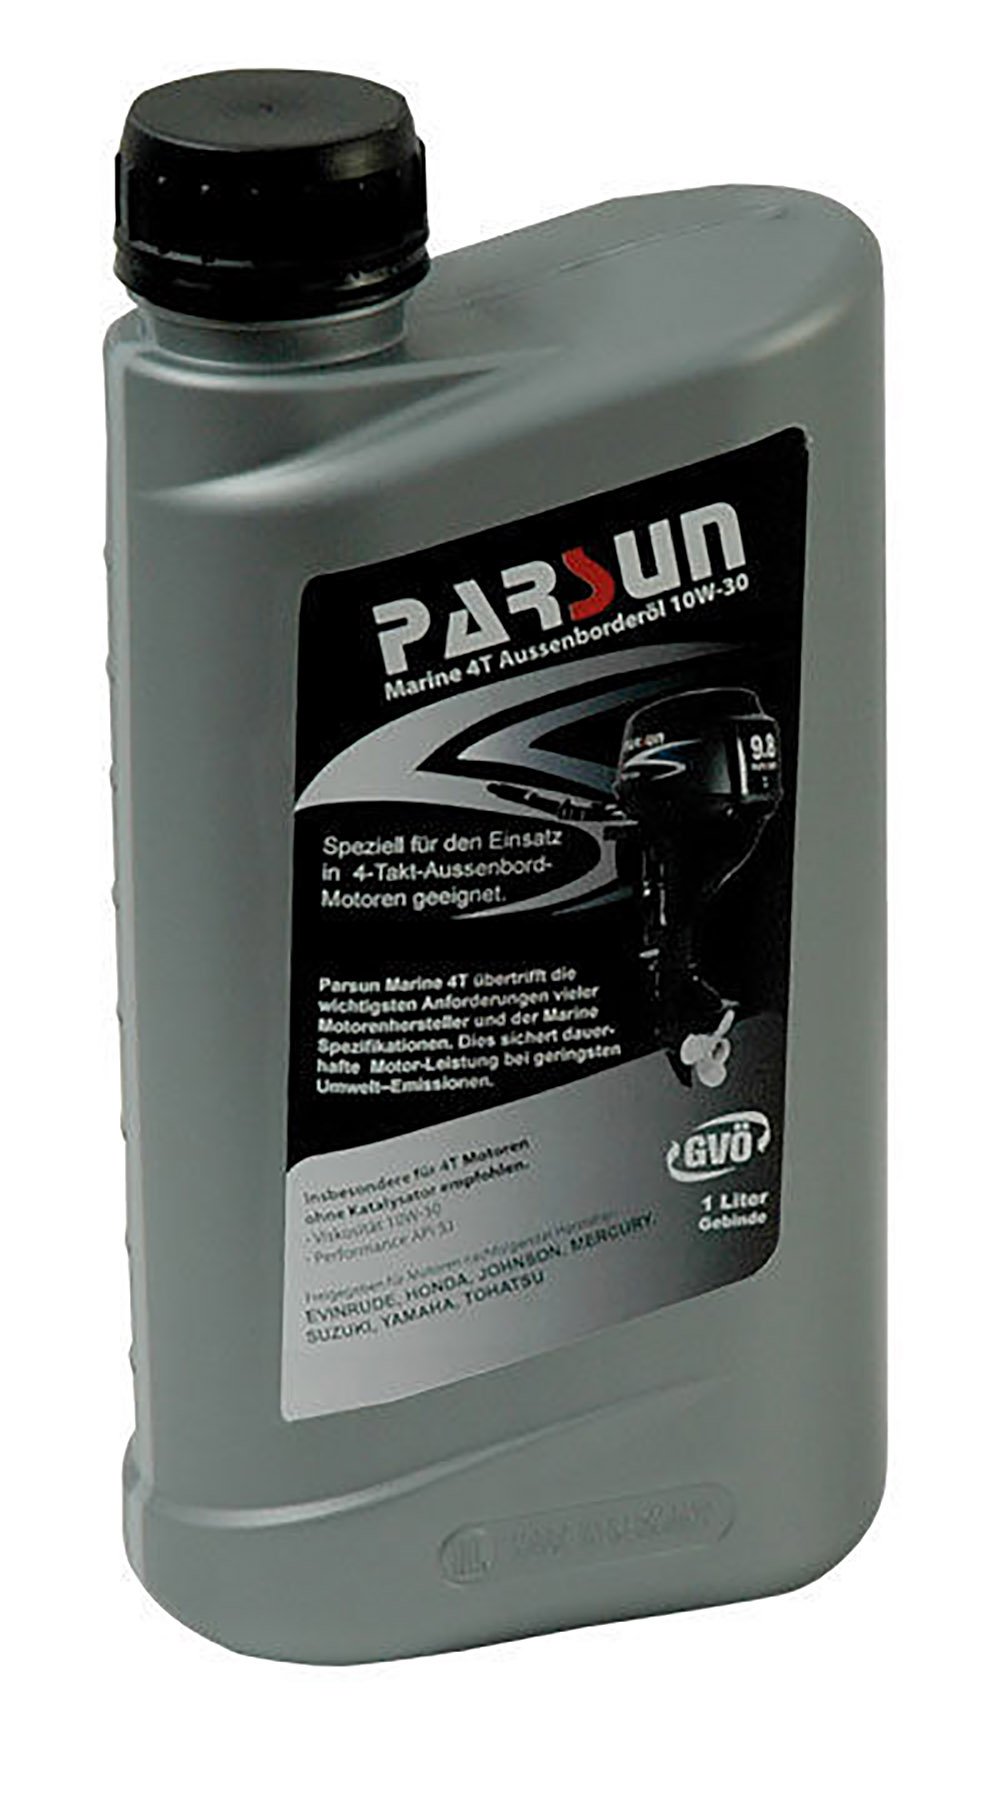 Parsun Outboard Motor Oil 10W-30 1Liter von Prowake